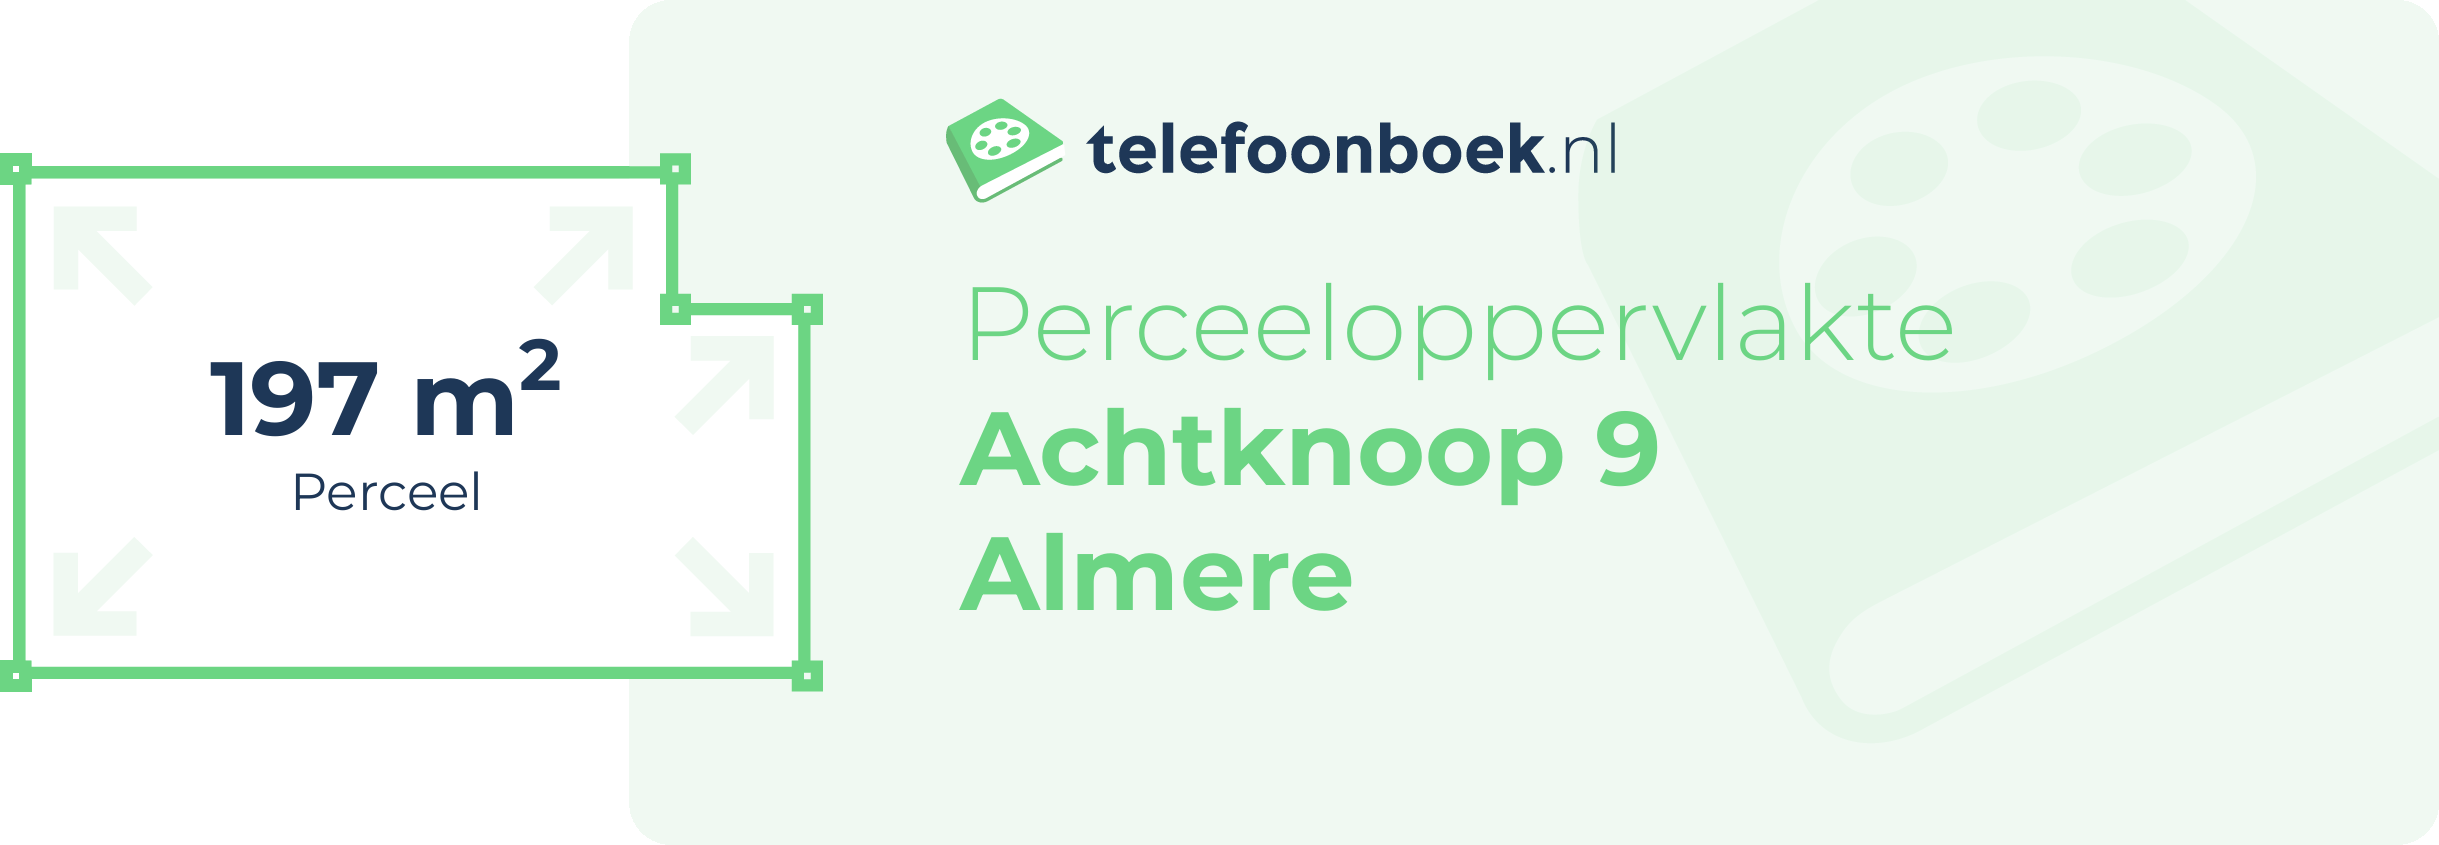 Perceeloppervlakte Achtknoop 9 Almere